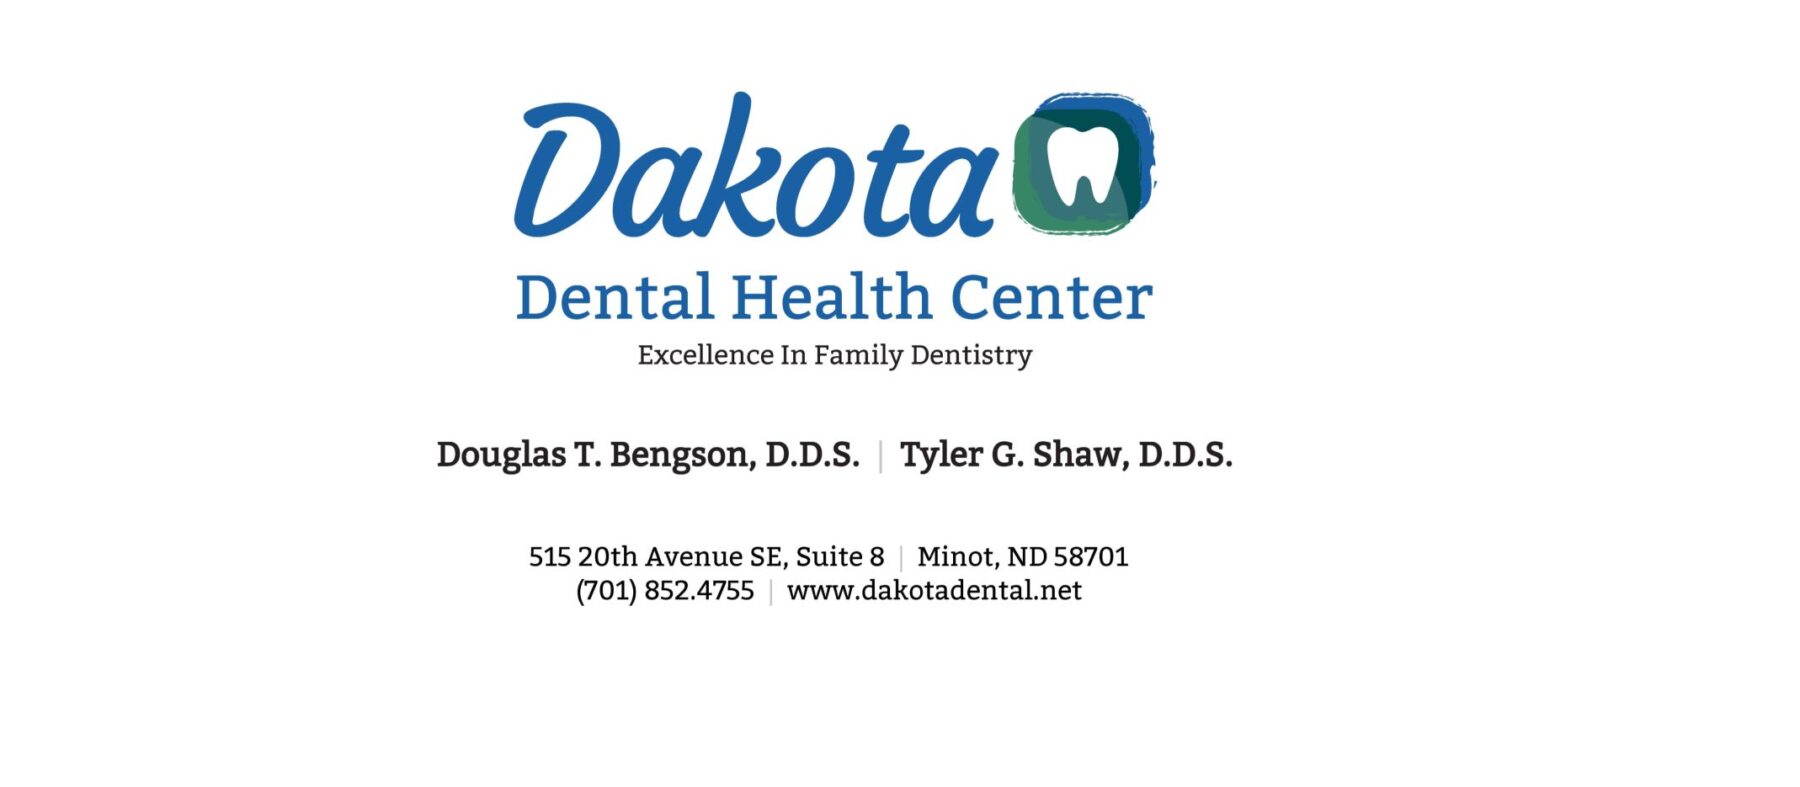 Dakota dental health center logo